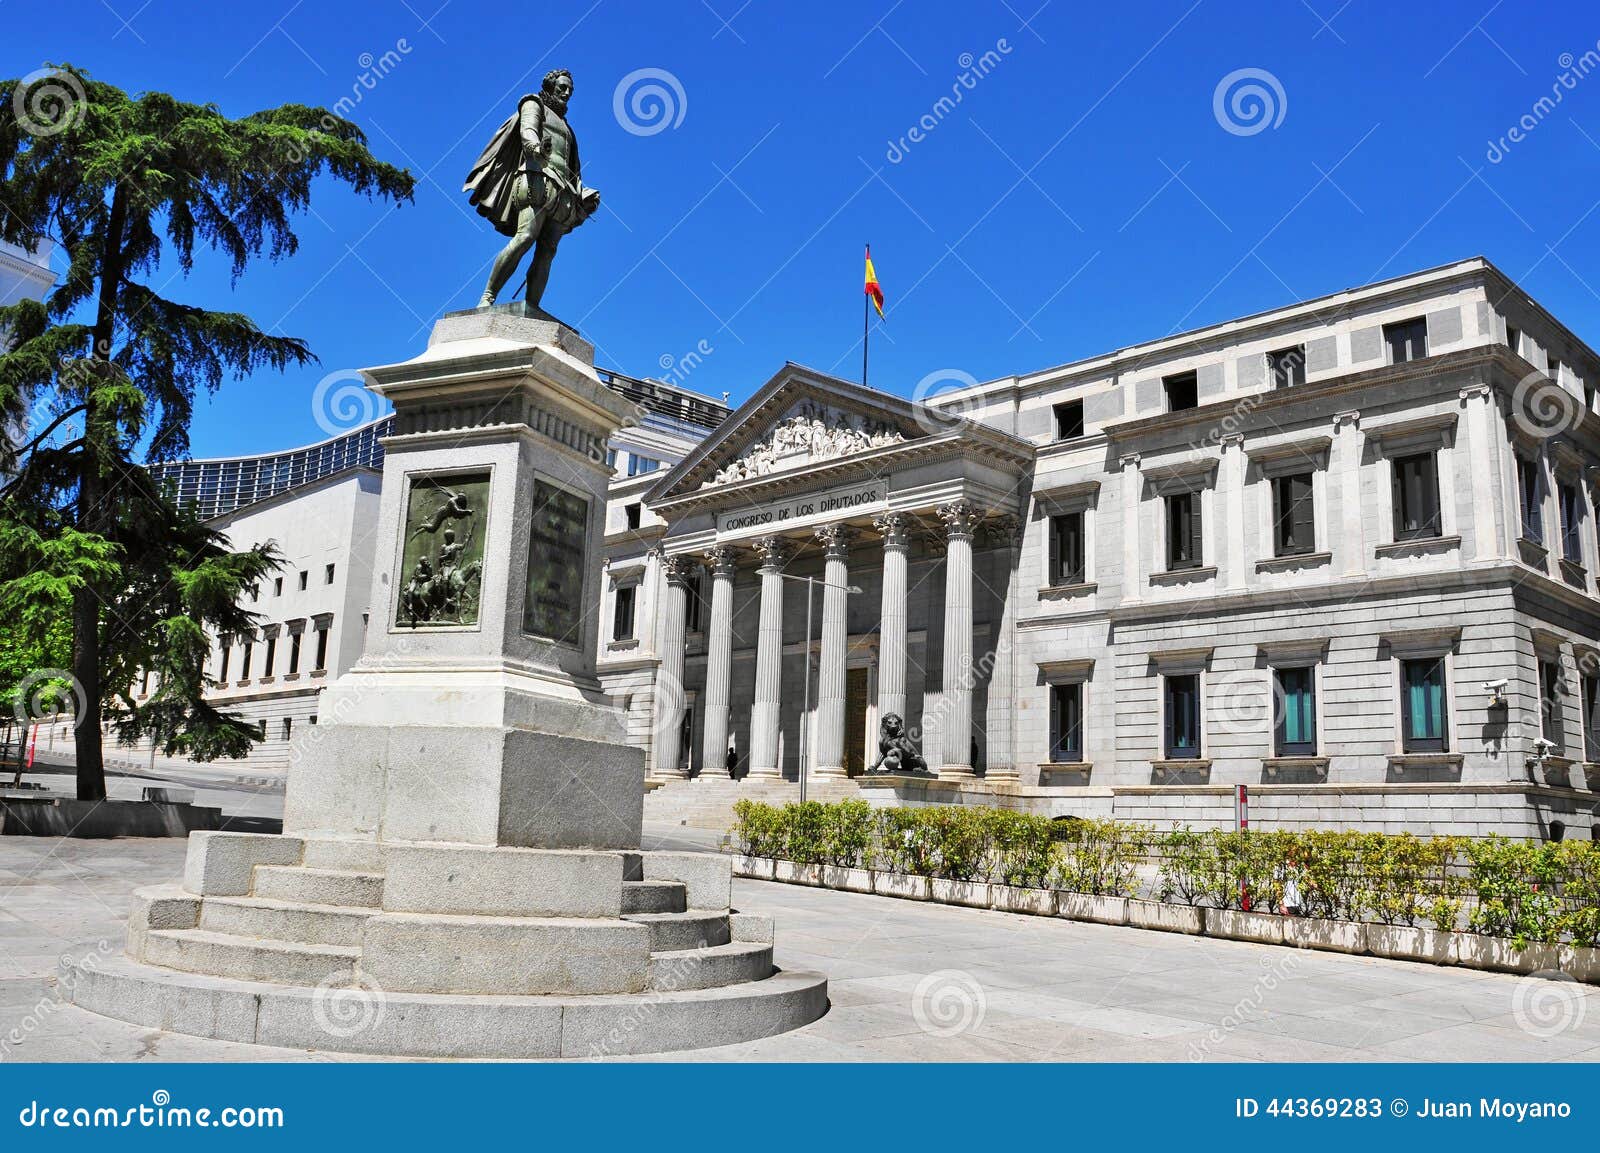 plaza de las cortes and spanish congress of deputies in madrid,